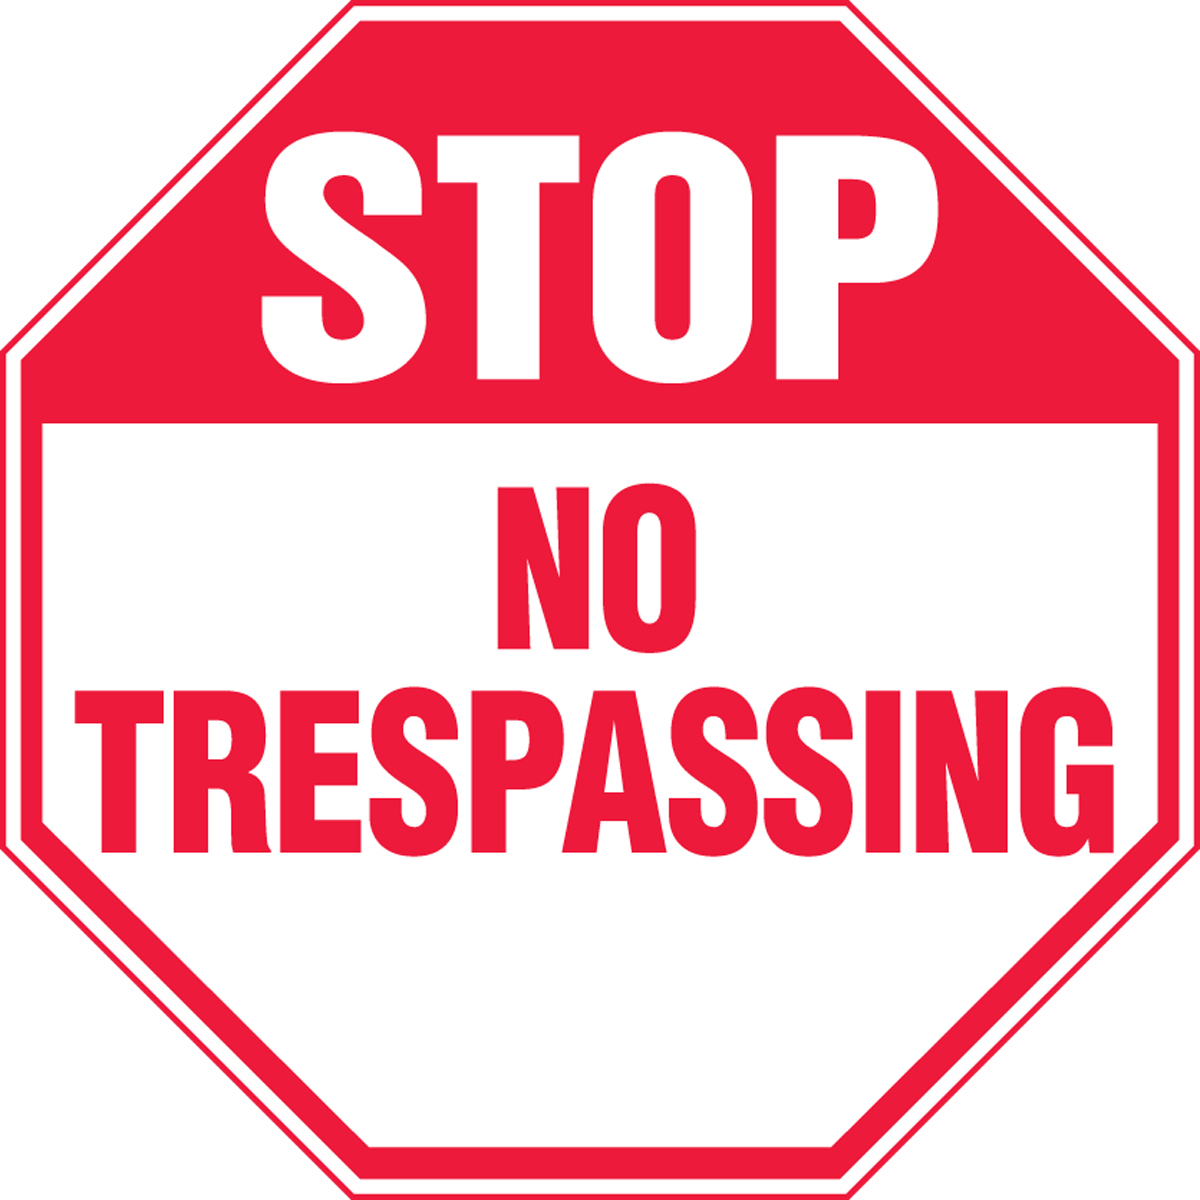 10 x 14 Inches MADM076XF Dura-Fiberglass AccuformDanger No Trespassing Safety Sign 